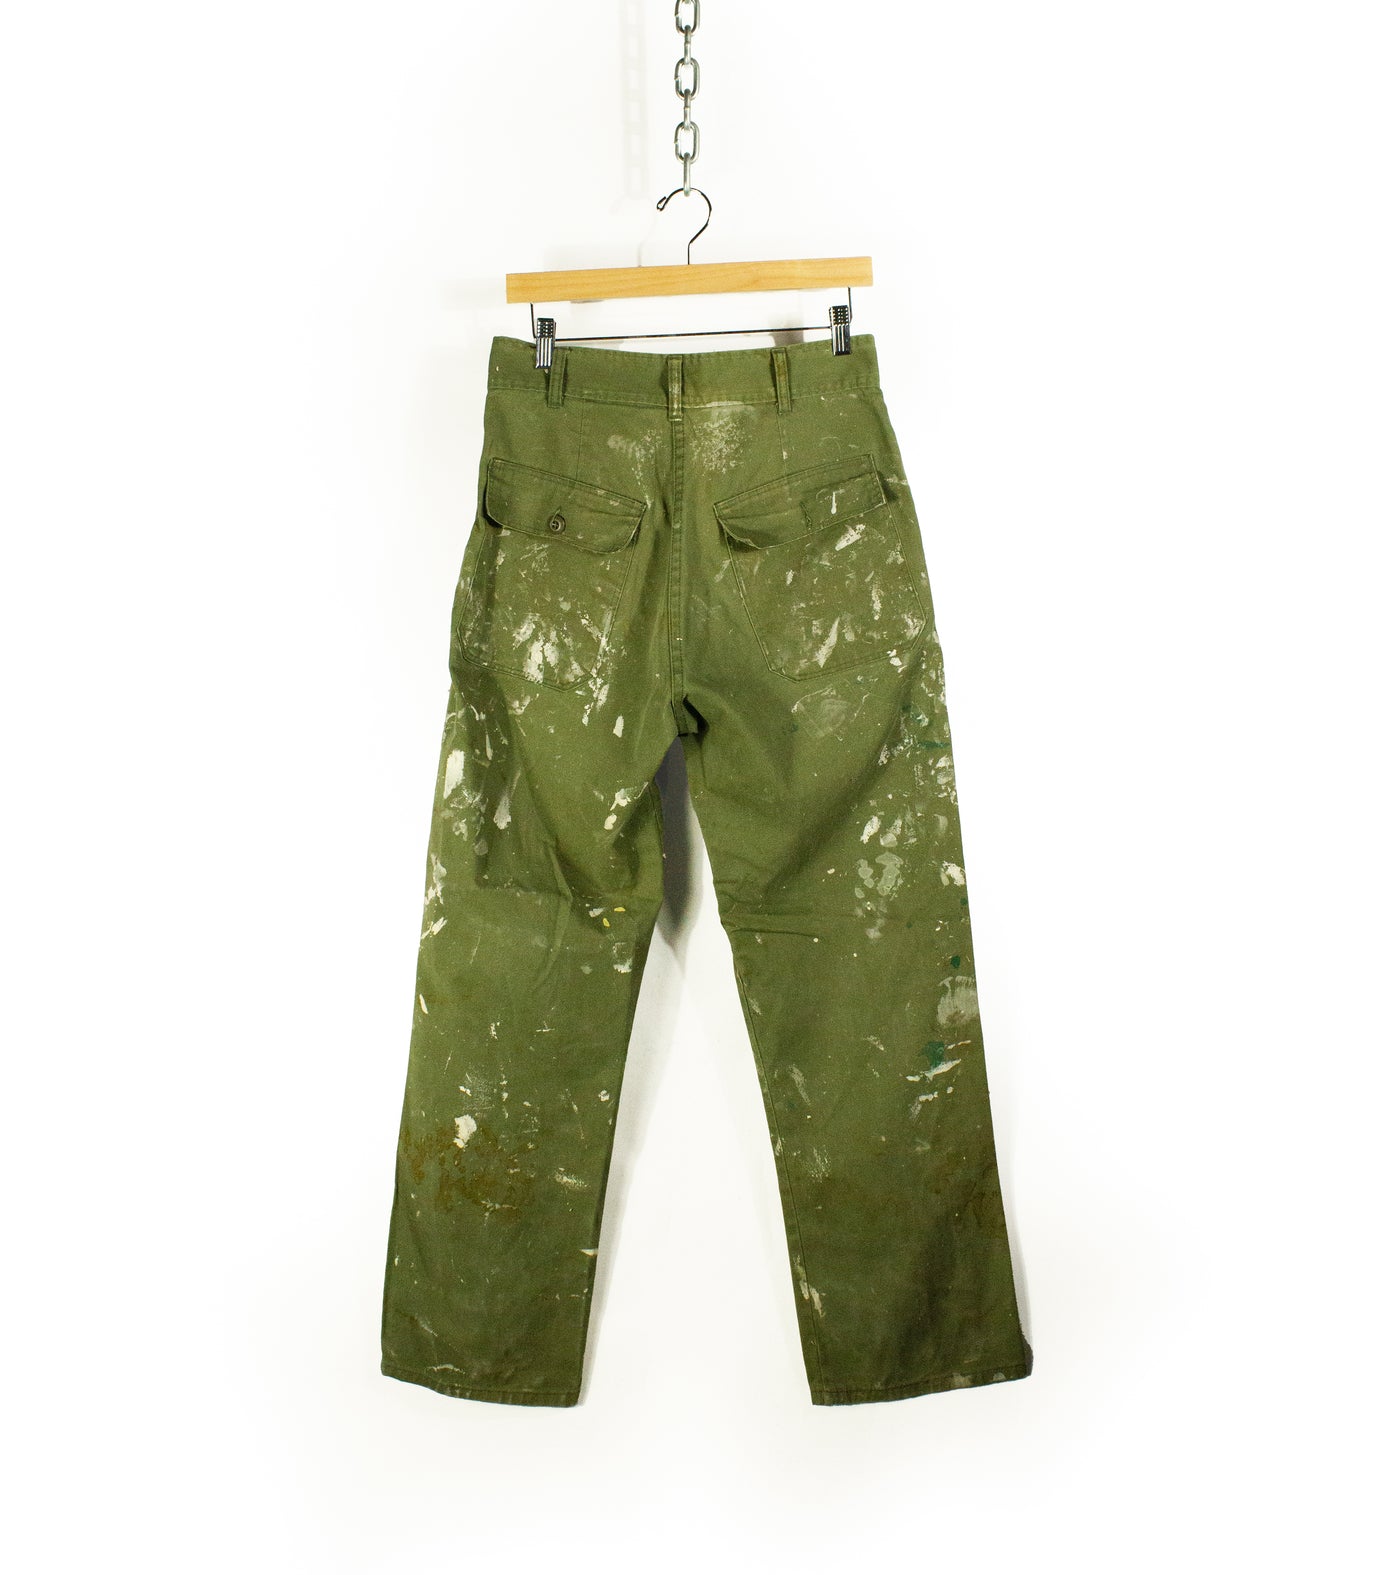 Vintage 80s Military Painter Pants